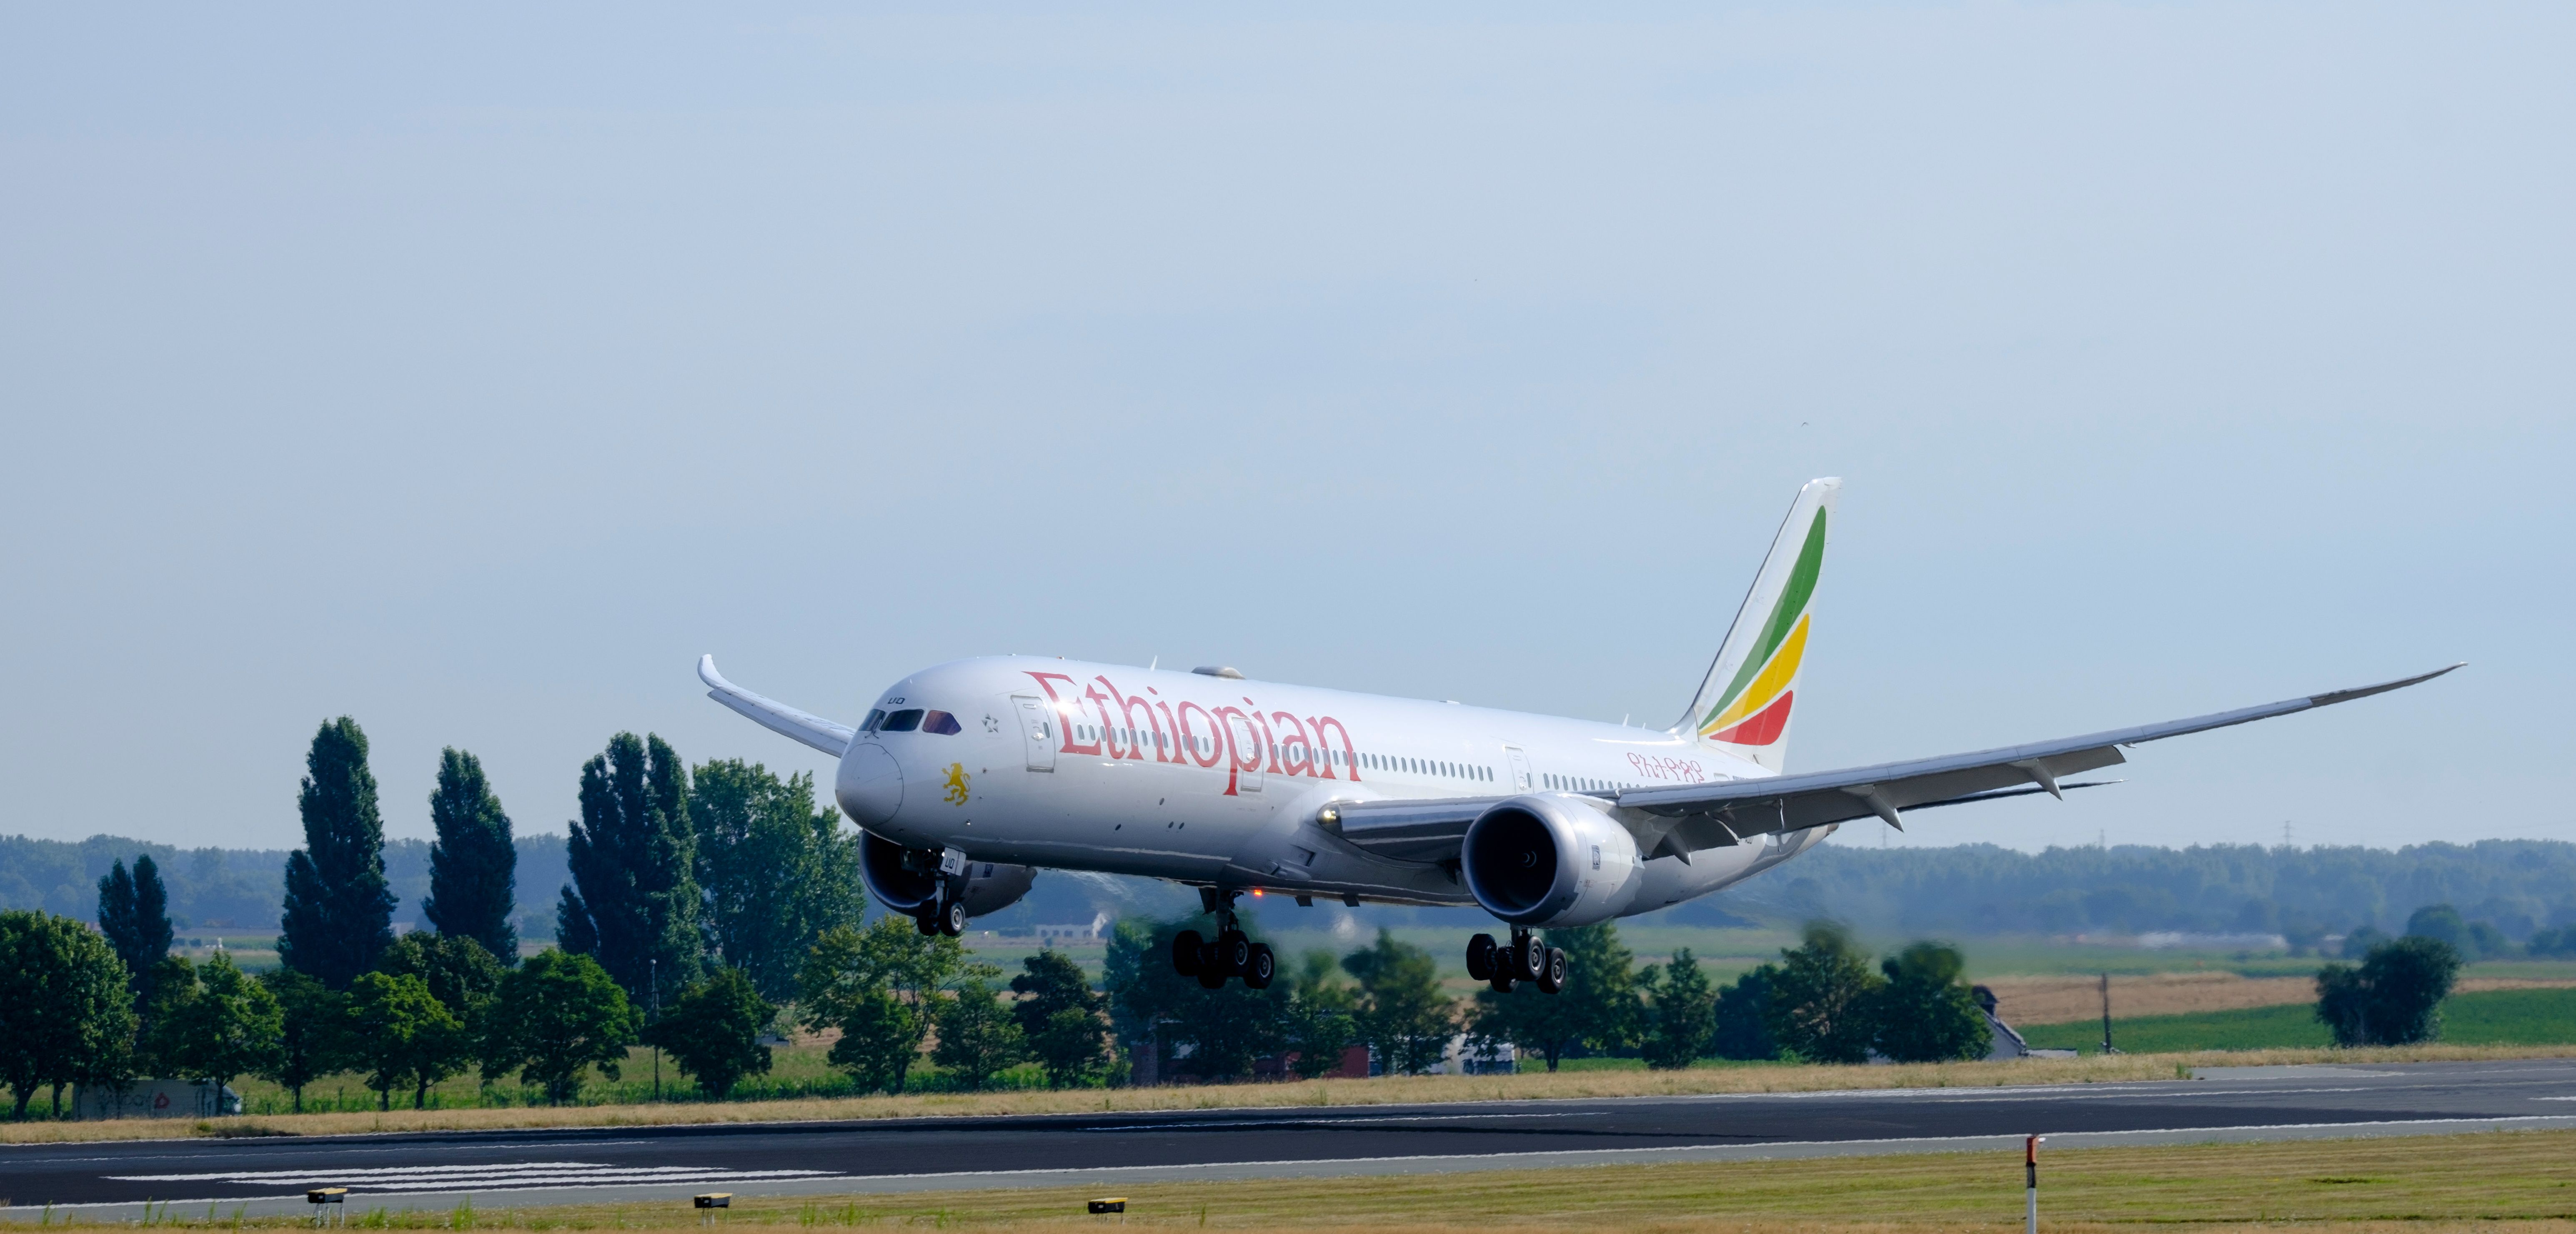  Boeing 787-9 Dreamliner (ET-AUO) from Ethiopian Airlines is landing in Brussels Airport on July 29, 2022 in Zaventem, Belgium. 